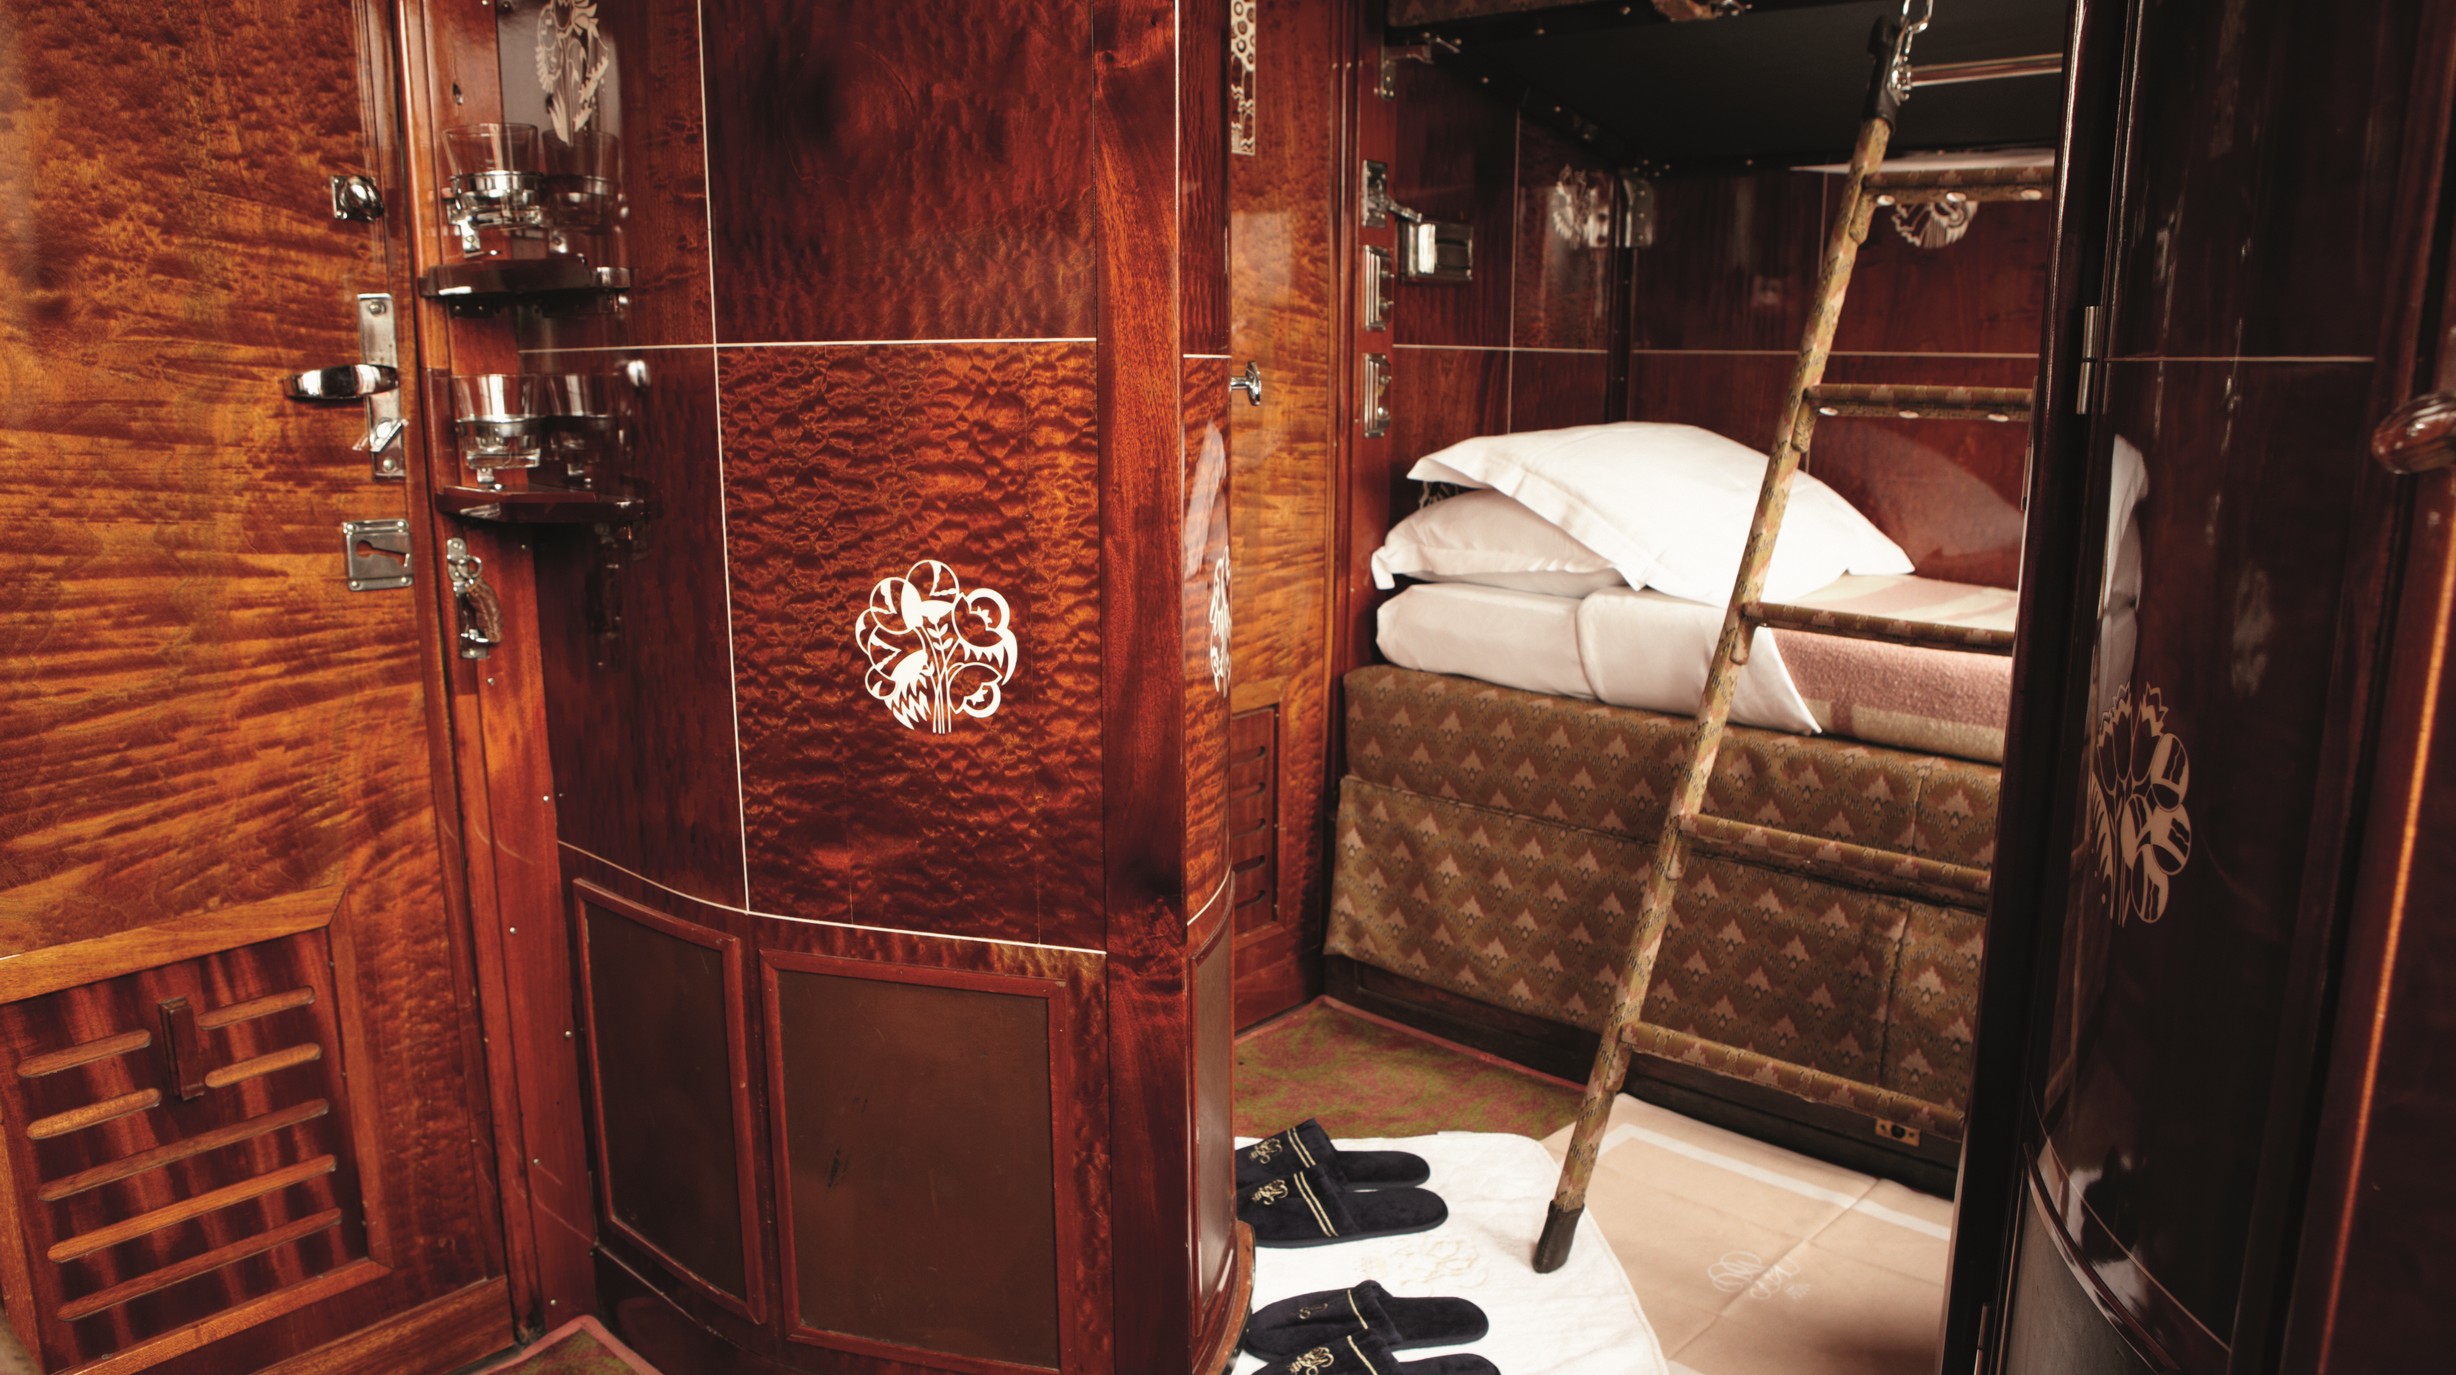 Venice Simplon Orient Express cabin 